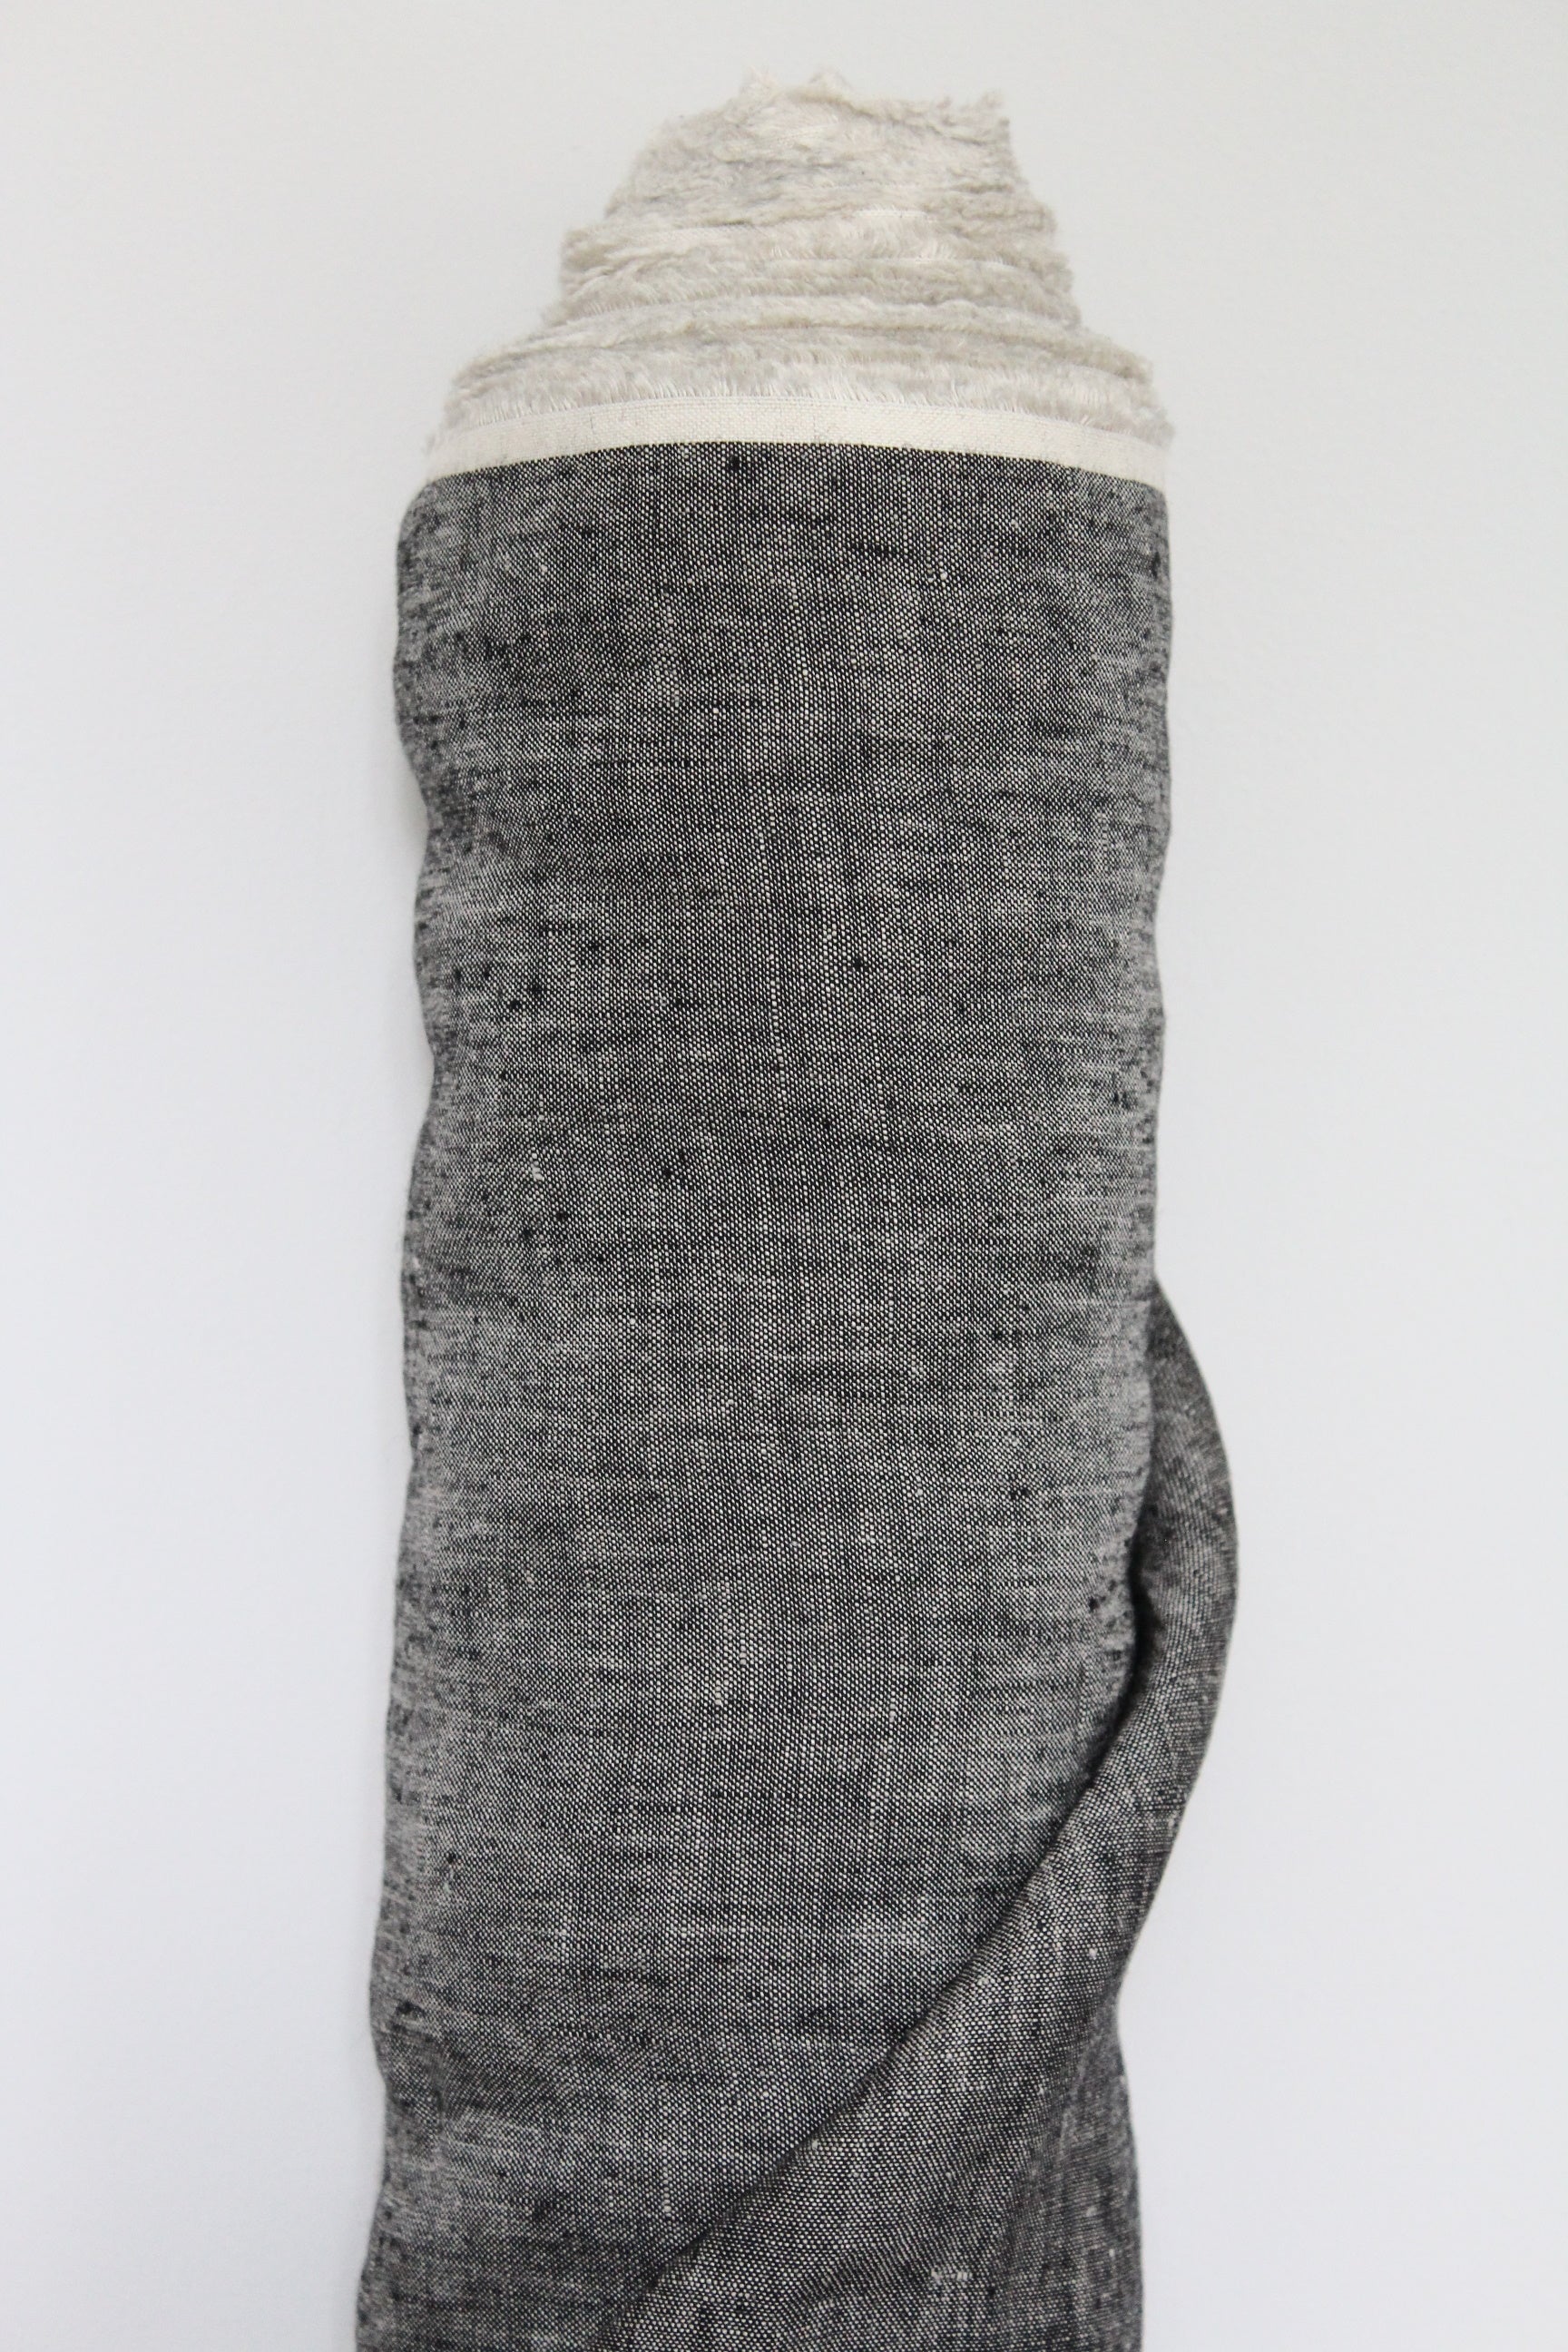 Kira Grey Linen Fabric - AVLEN